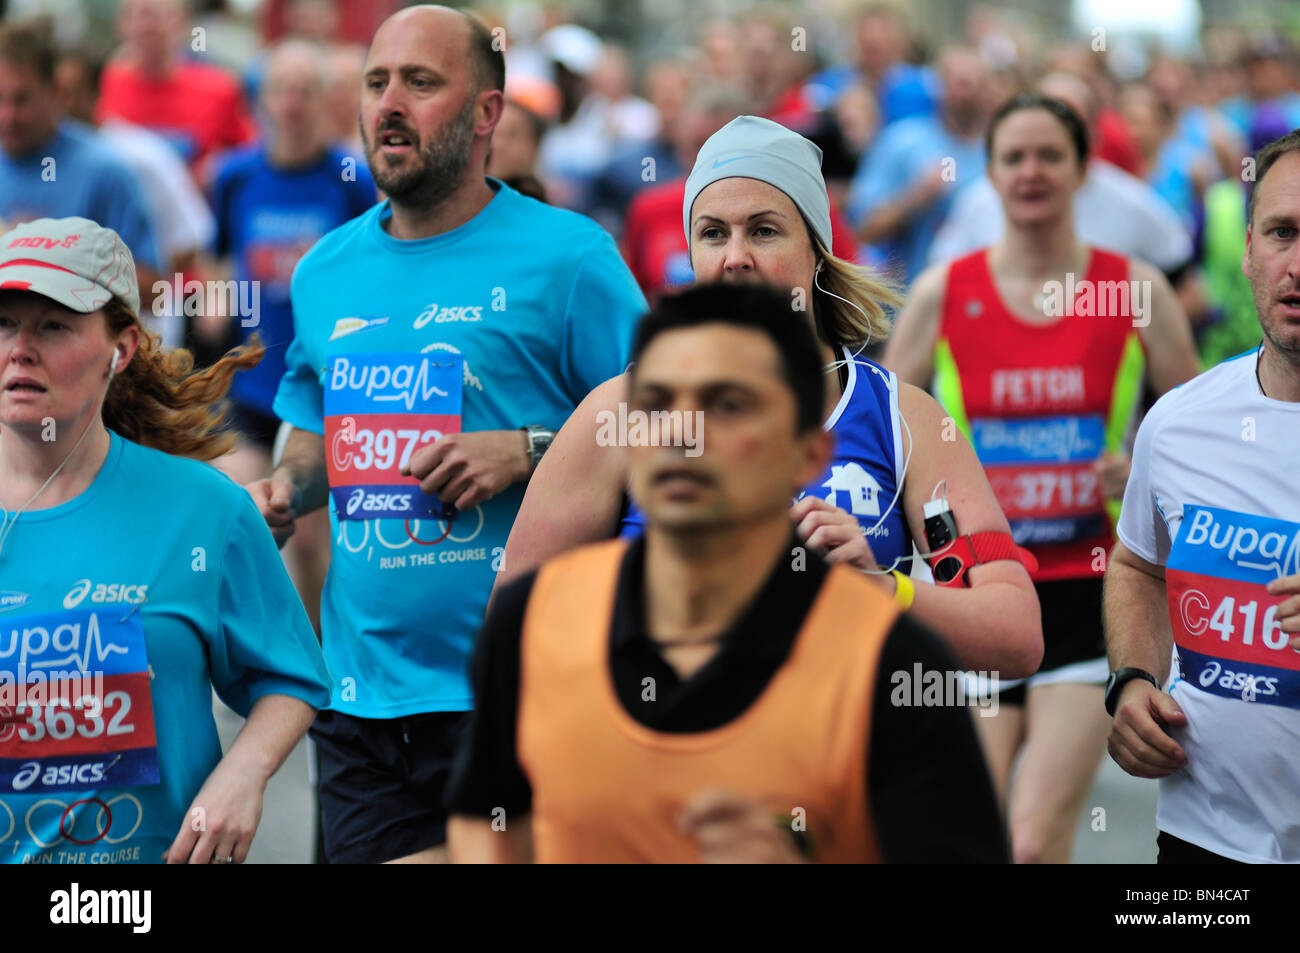 Mass participation running event, London, United Kingdom Stock Photo